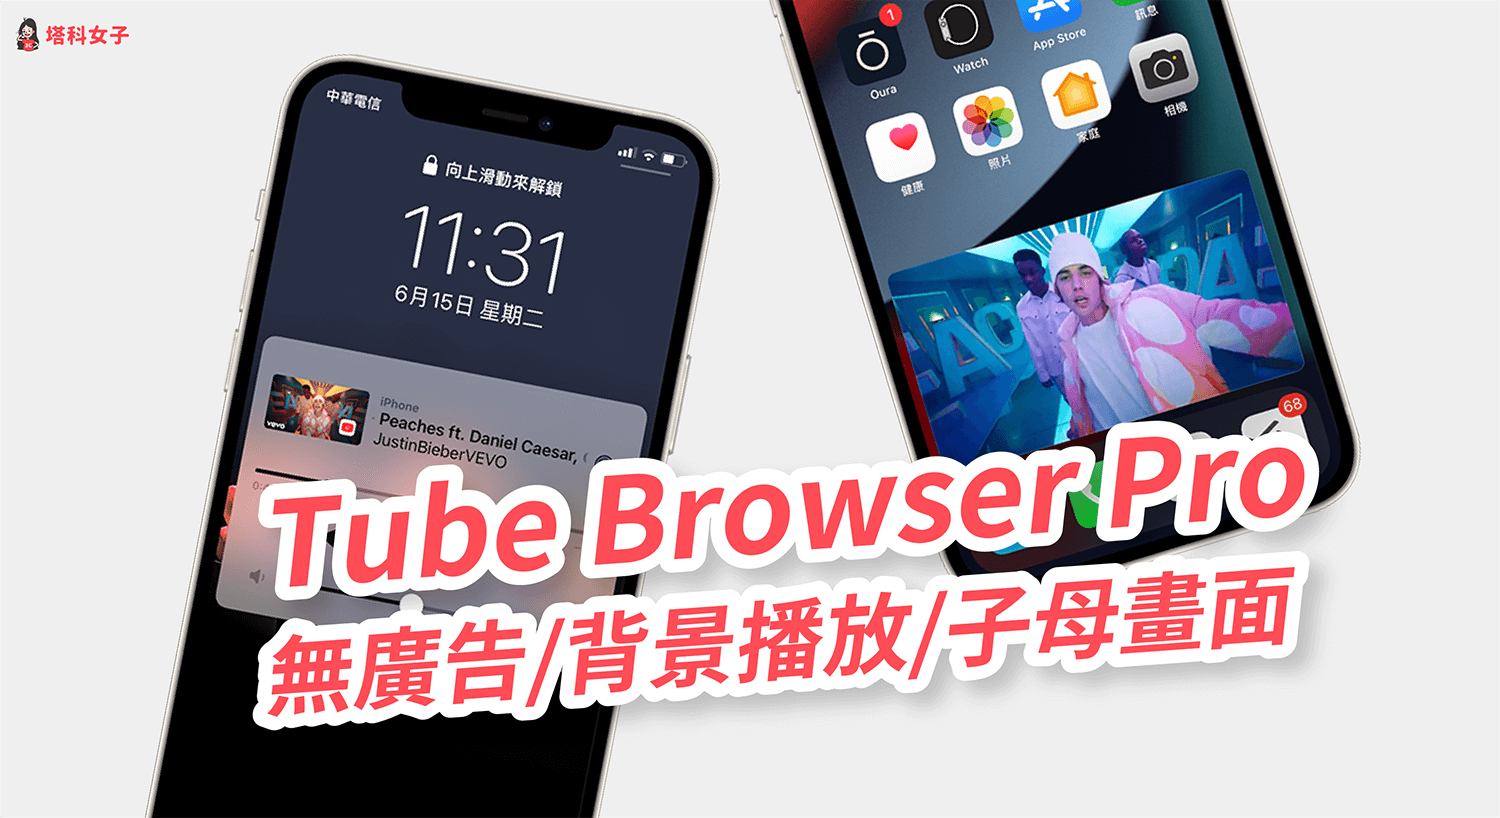 YouTube 背景播放 App - Tube Browser Pro，無廣告、支援 iOS 子母畫面